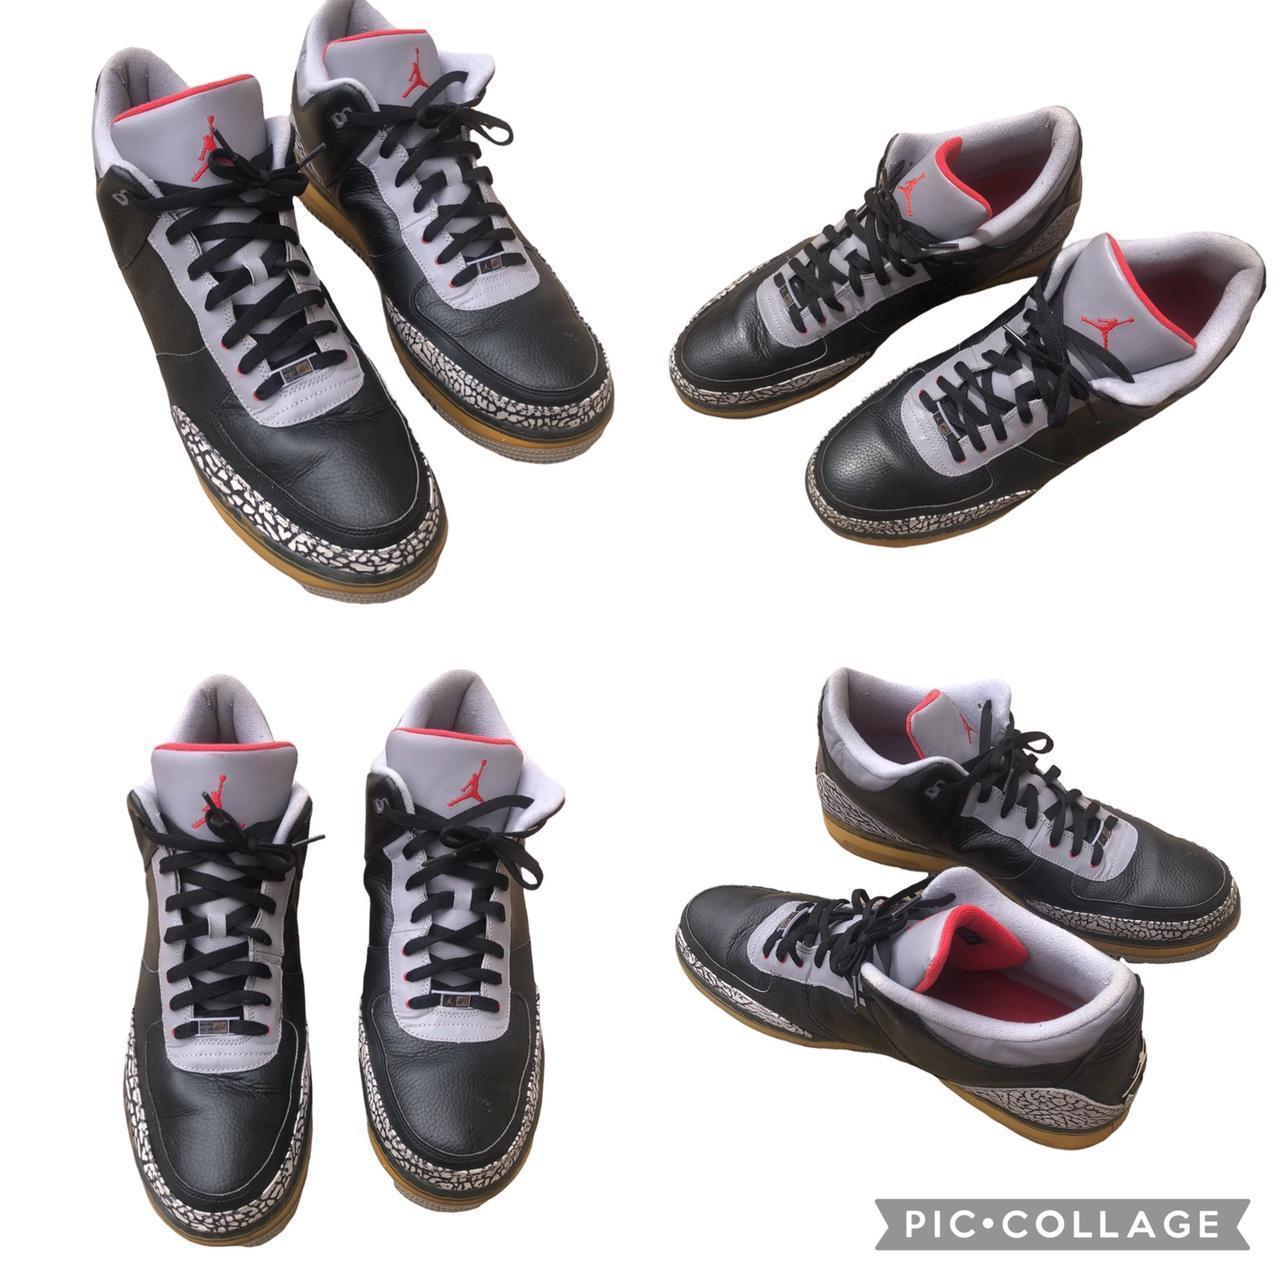 Air Jordan Fusion 3 Black Cement 323626-061 Release Date